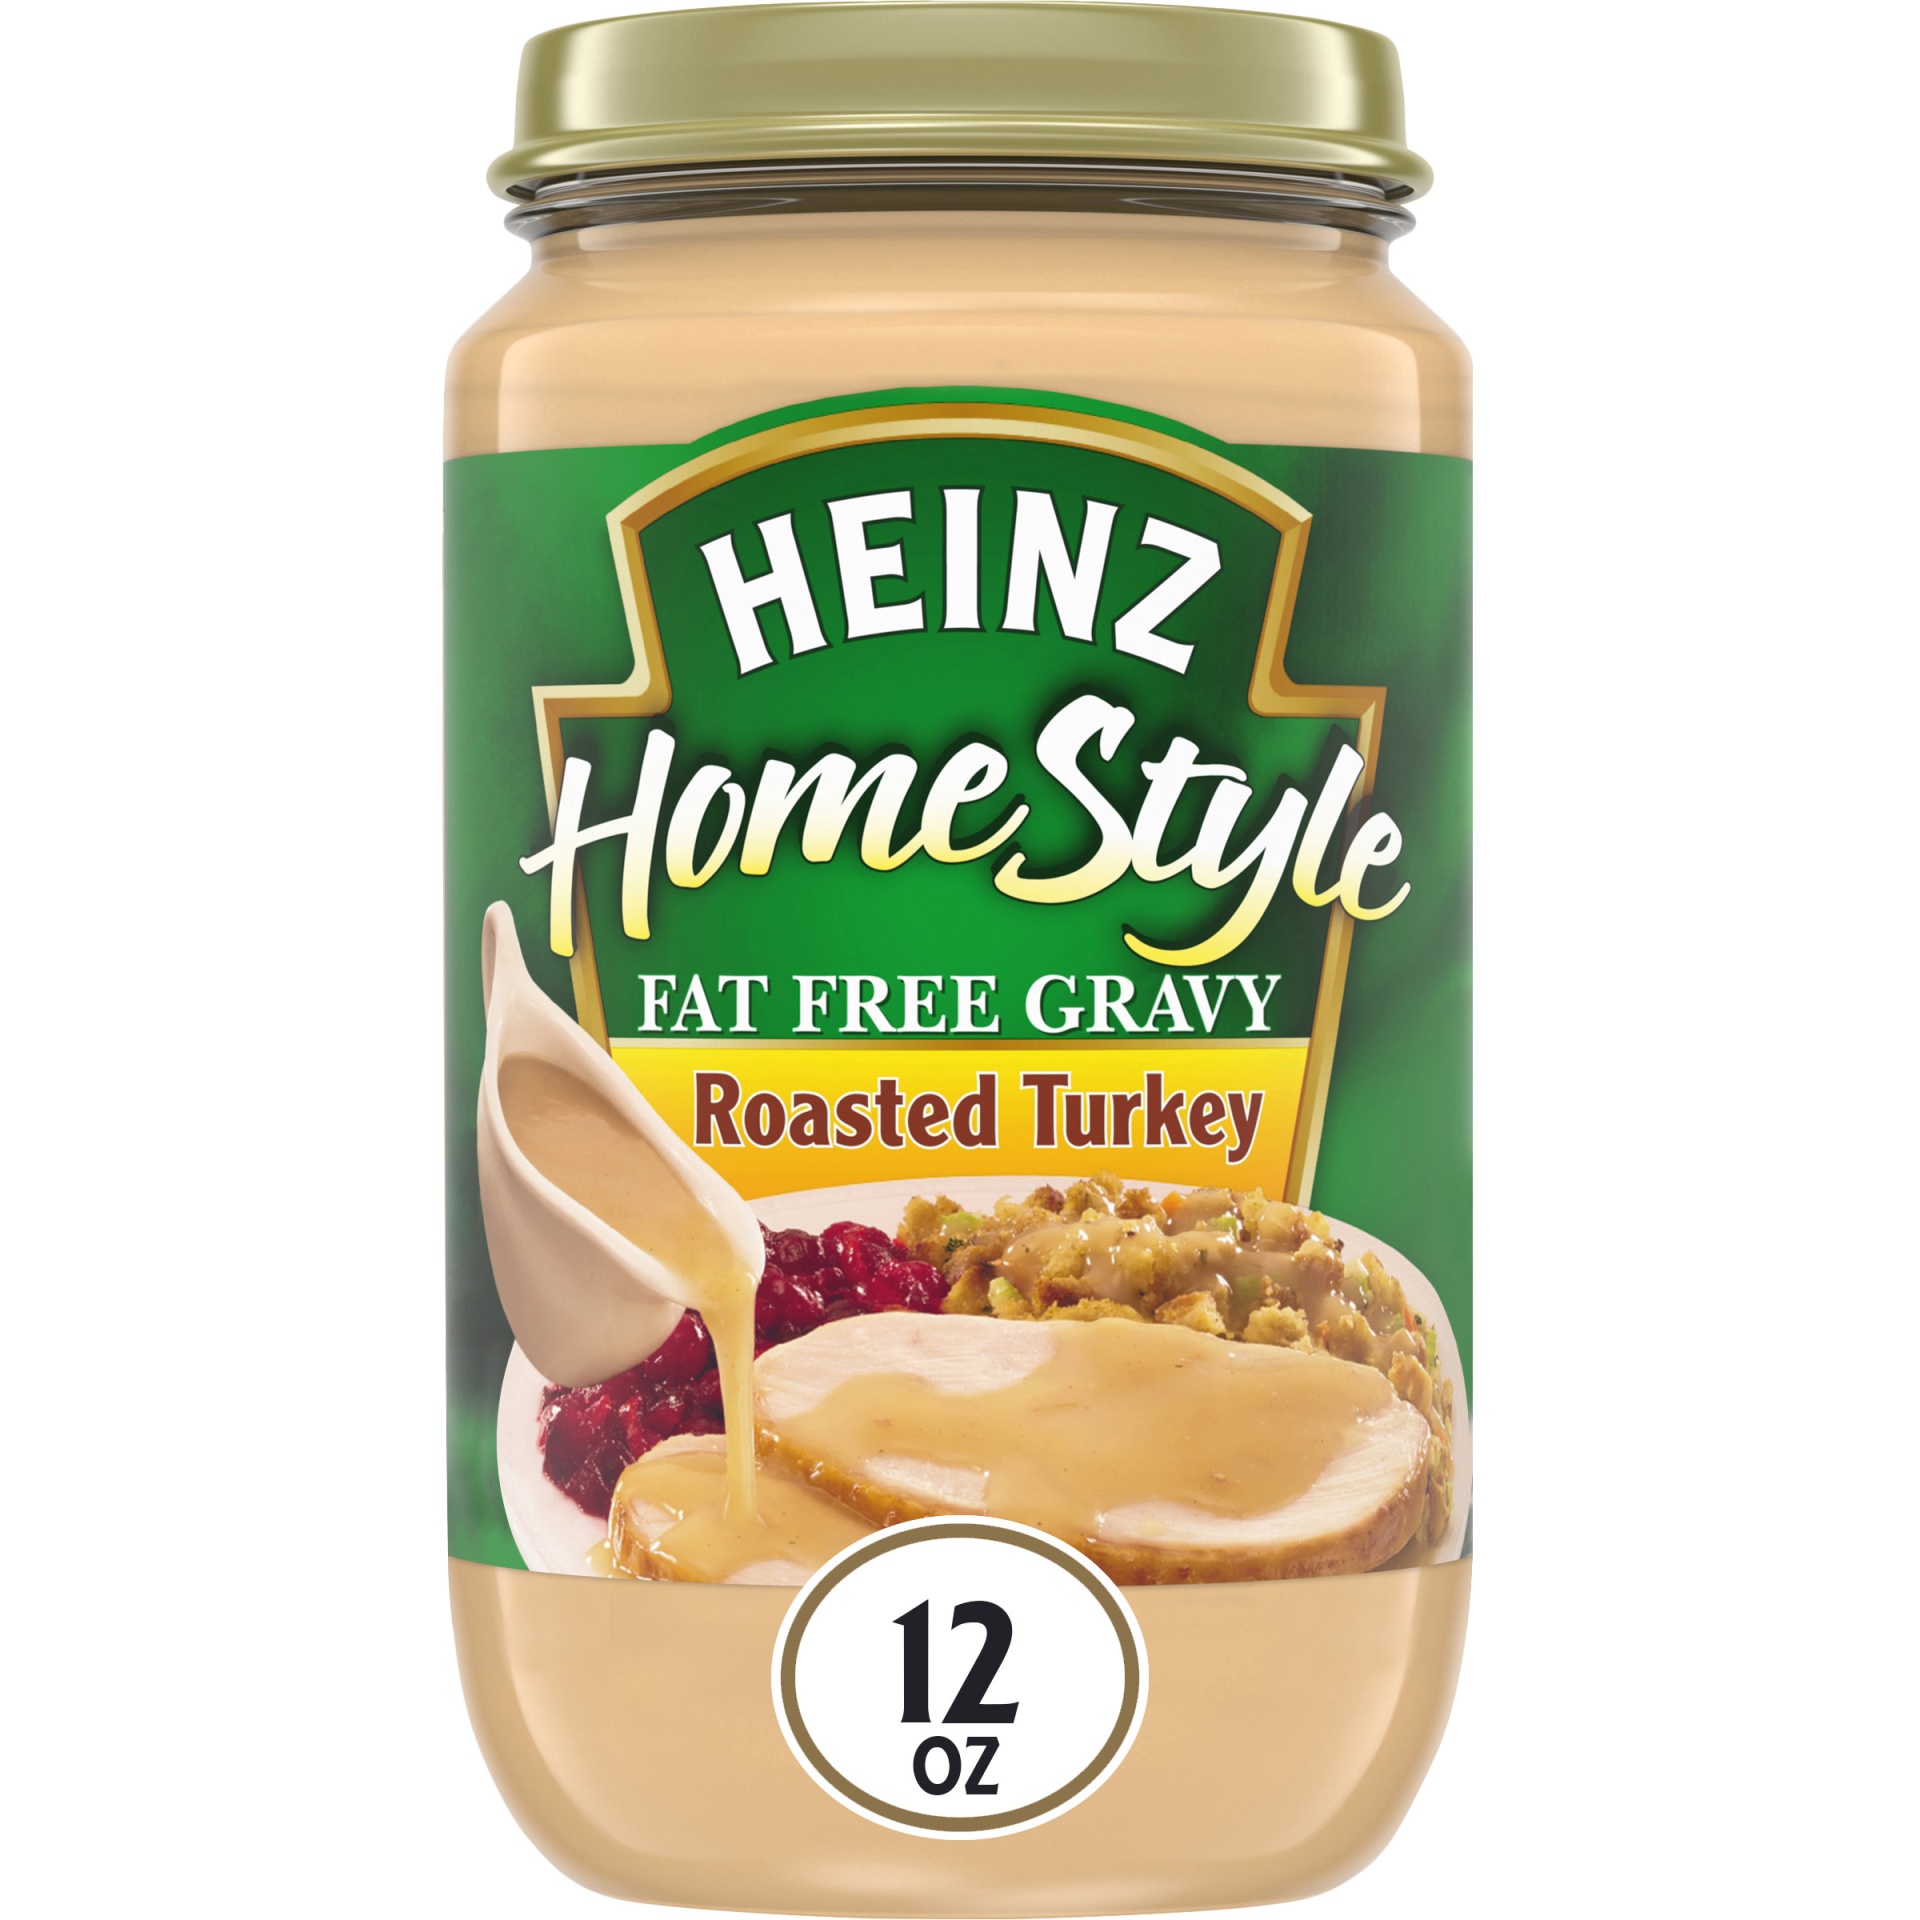 slide 1 of 1, Heinz HomeStyle Roasted Turkey Fat Free Gravy Jar, 12 oz